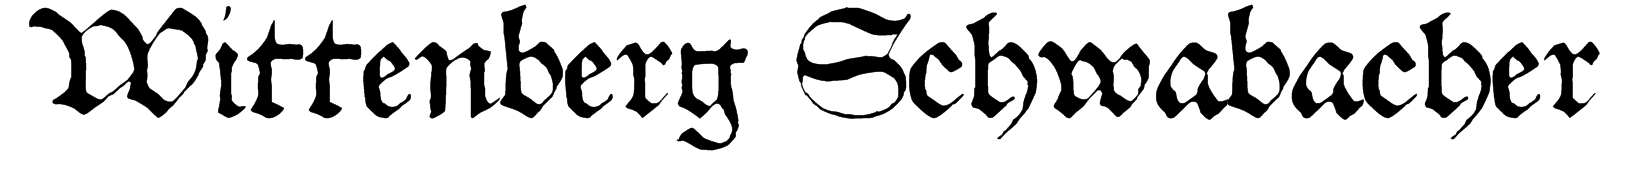 A German Fraktur font called "Wittenberger Schwabacher" from the Walden Font Co. It is part of the Gutenberg Press set of fonts.